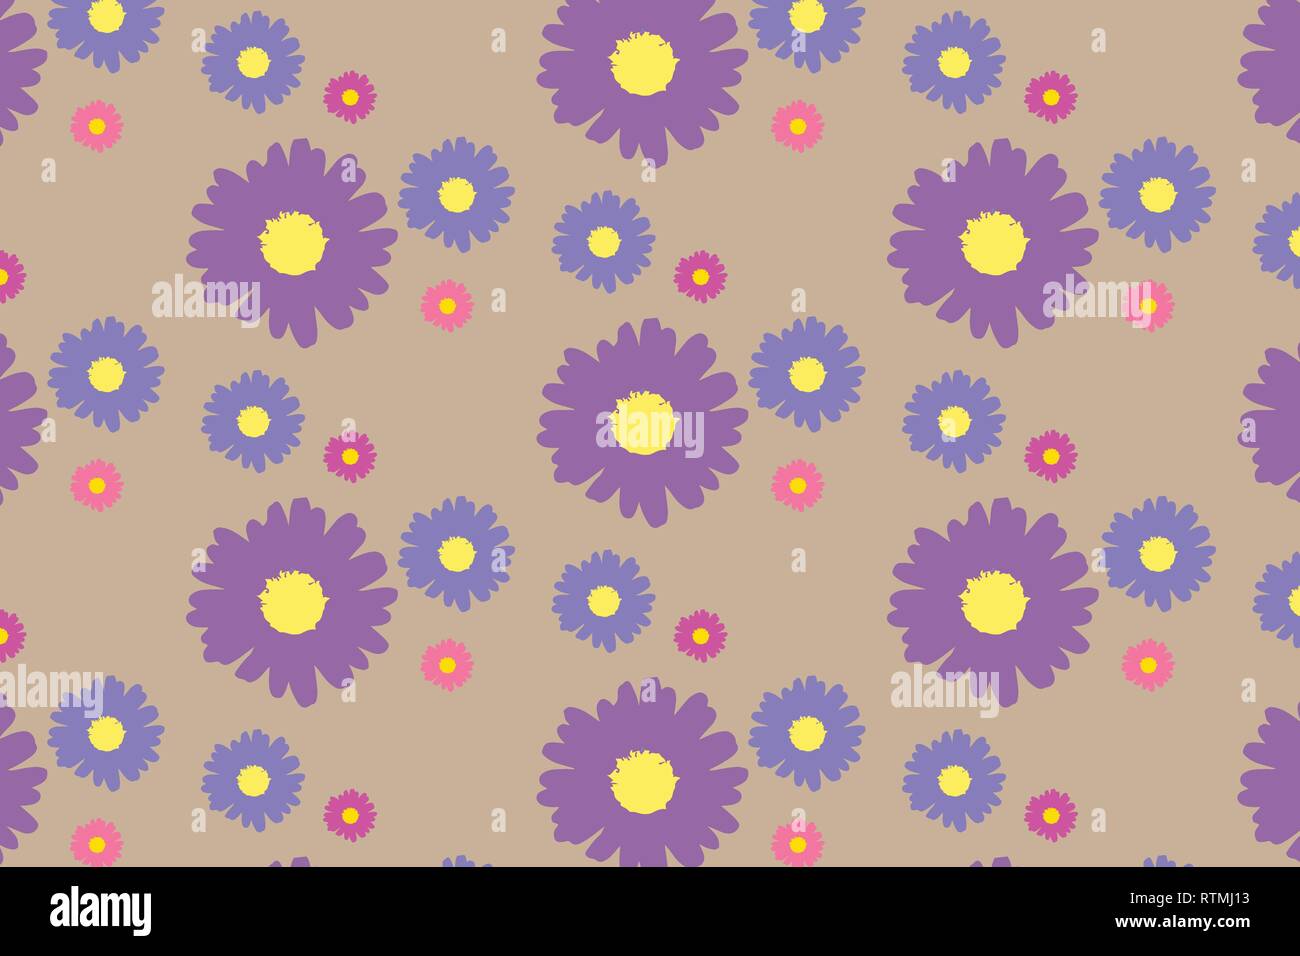 Florales Muster-Vector Illustration - Blumen - Hintergrund - Editierbare Layer Abbildung Stock Vektor